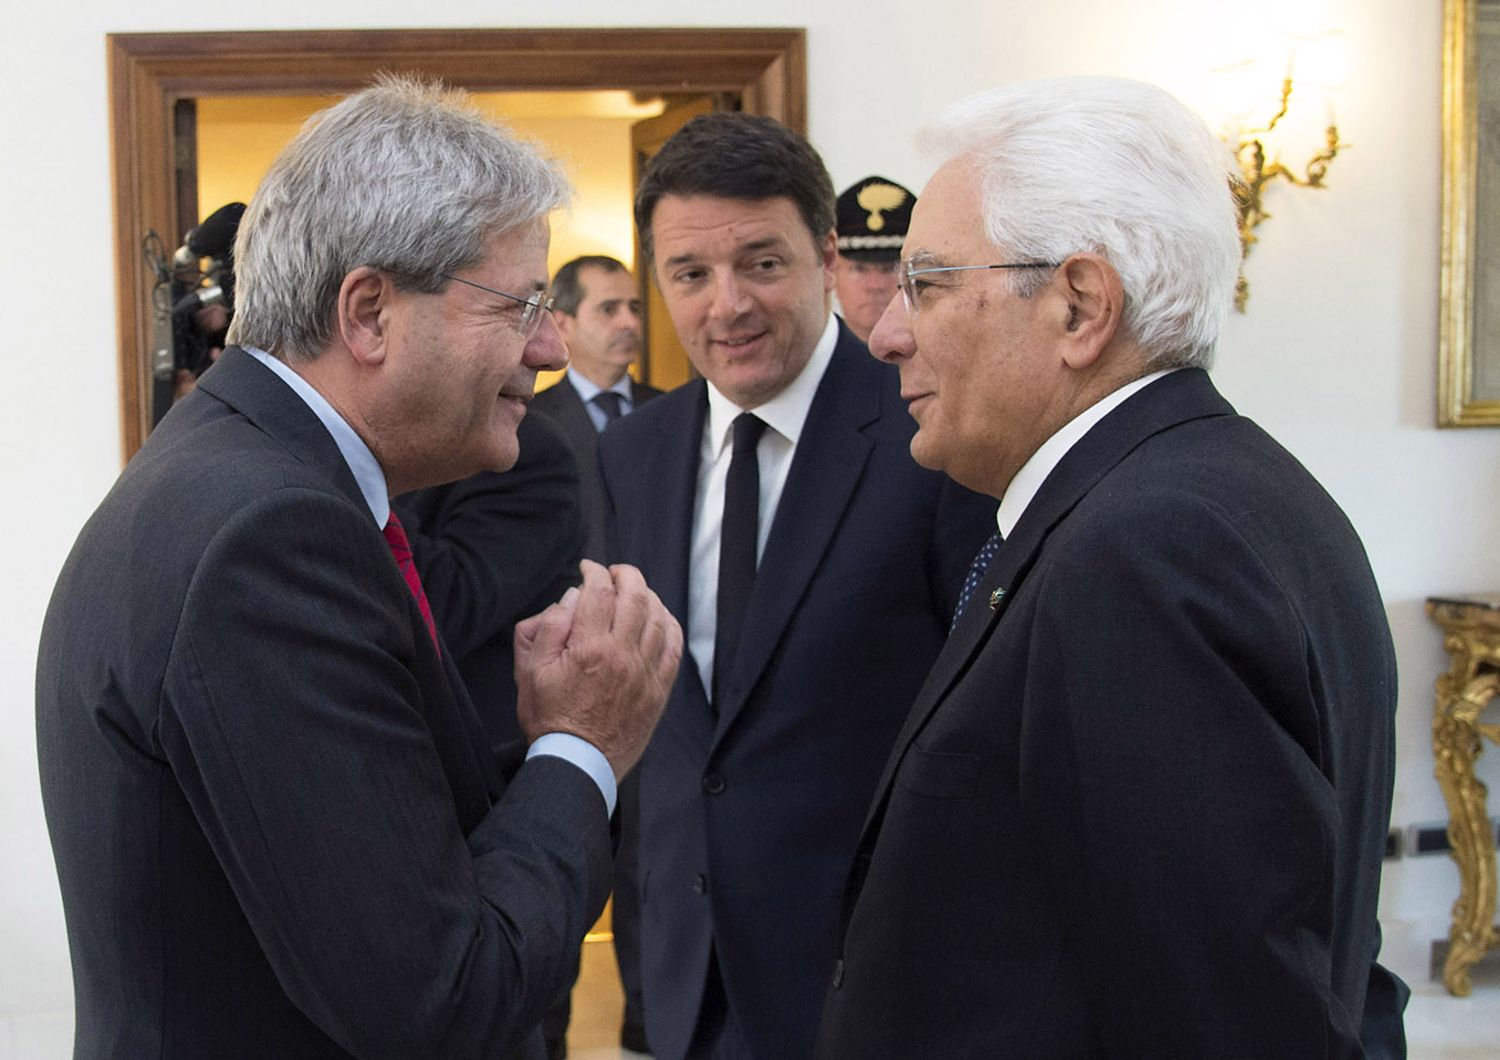 Gentiloni, Renzi e Mattarella (Imagoeconomica)&nbsp;